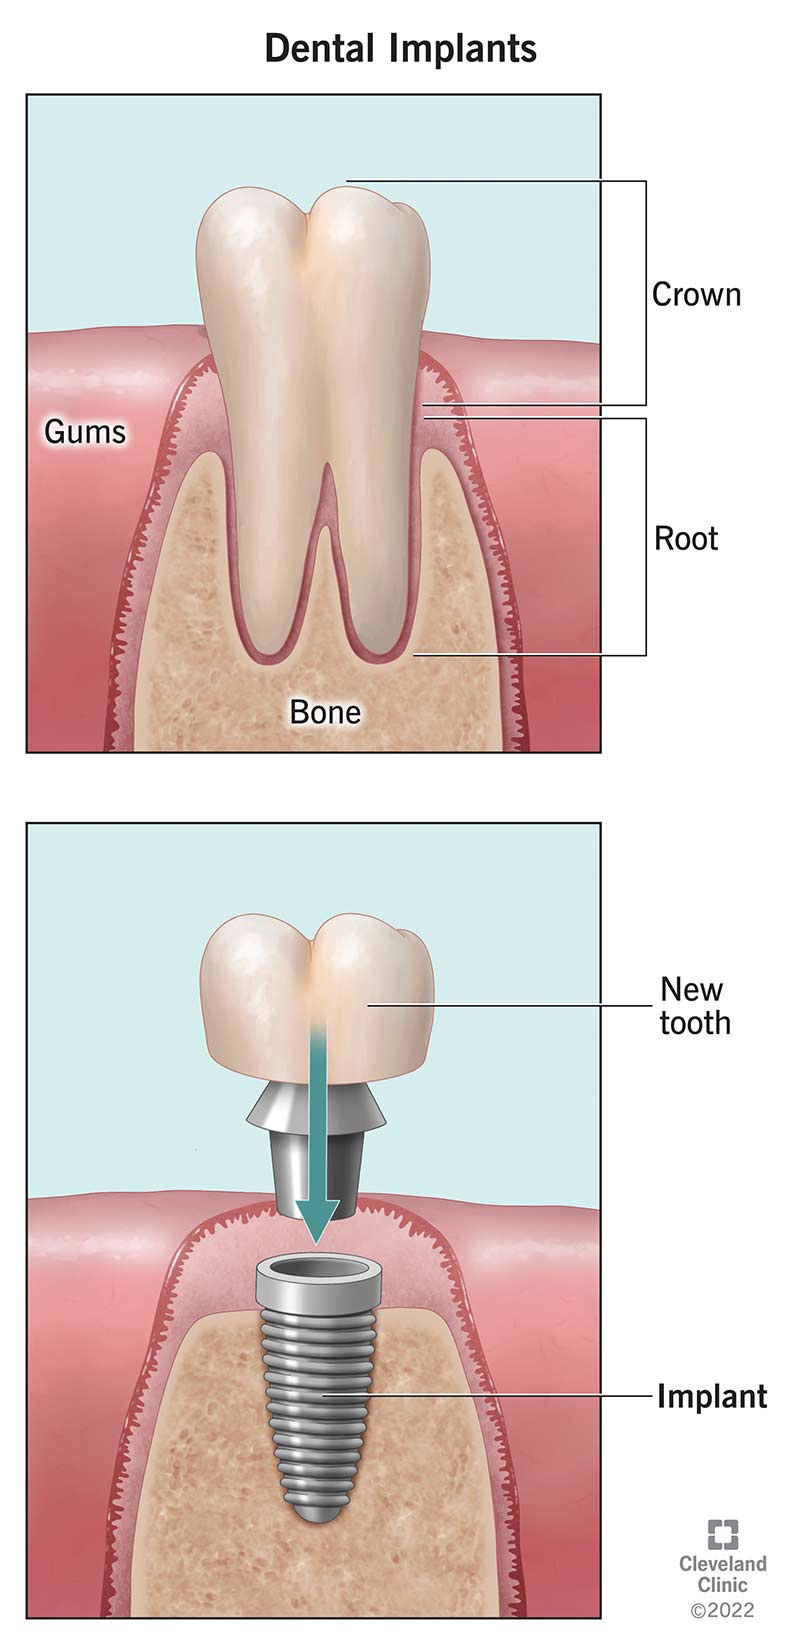 Natural tooth vs. dental implant in jawbone.